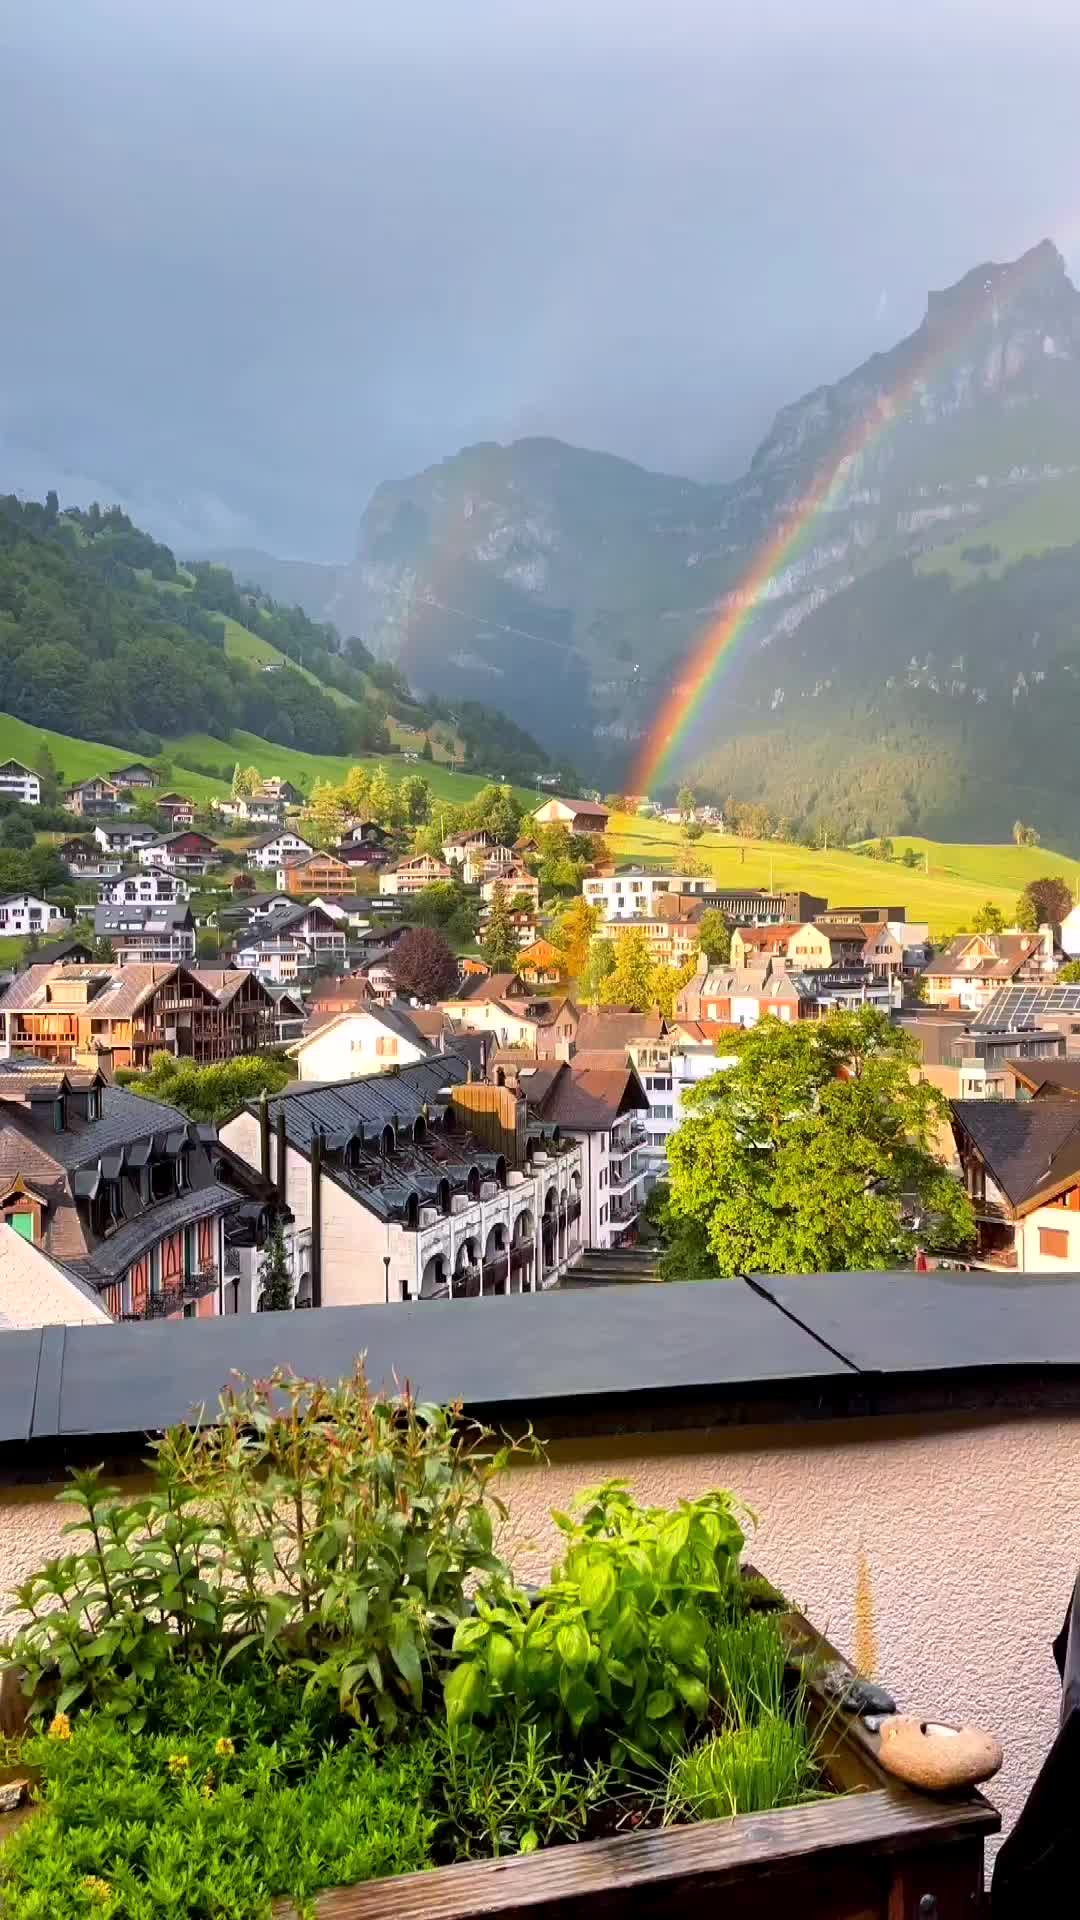 Magical Rainbow Evening in Engelberg, Switzerland 🌈